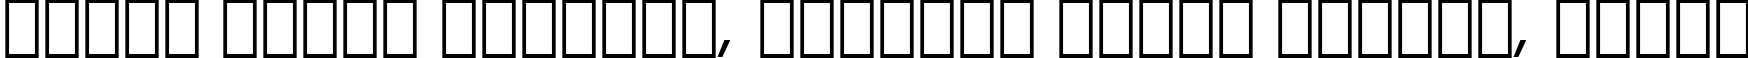 Пример написания шрифтом Geometric 415 Lite Italic BT текста на белорусском